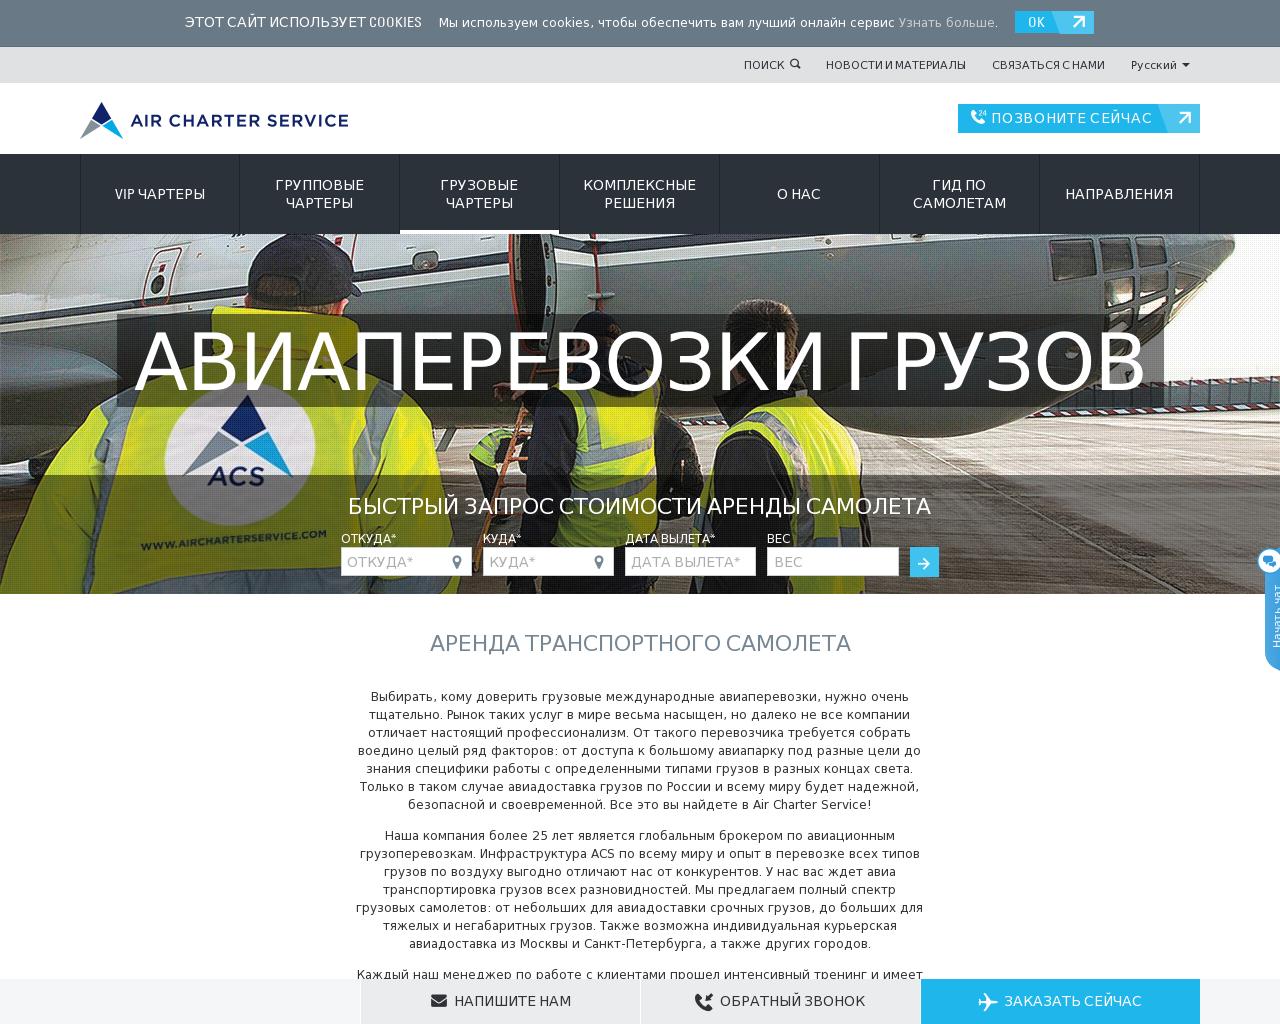 Изображение сайта aircharterservice.ru в разрешении 1280x1024